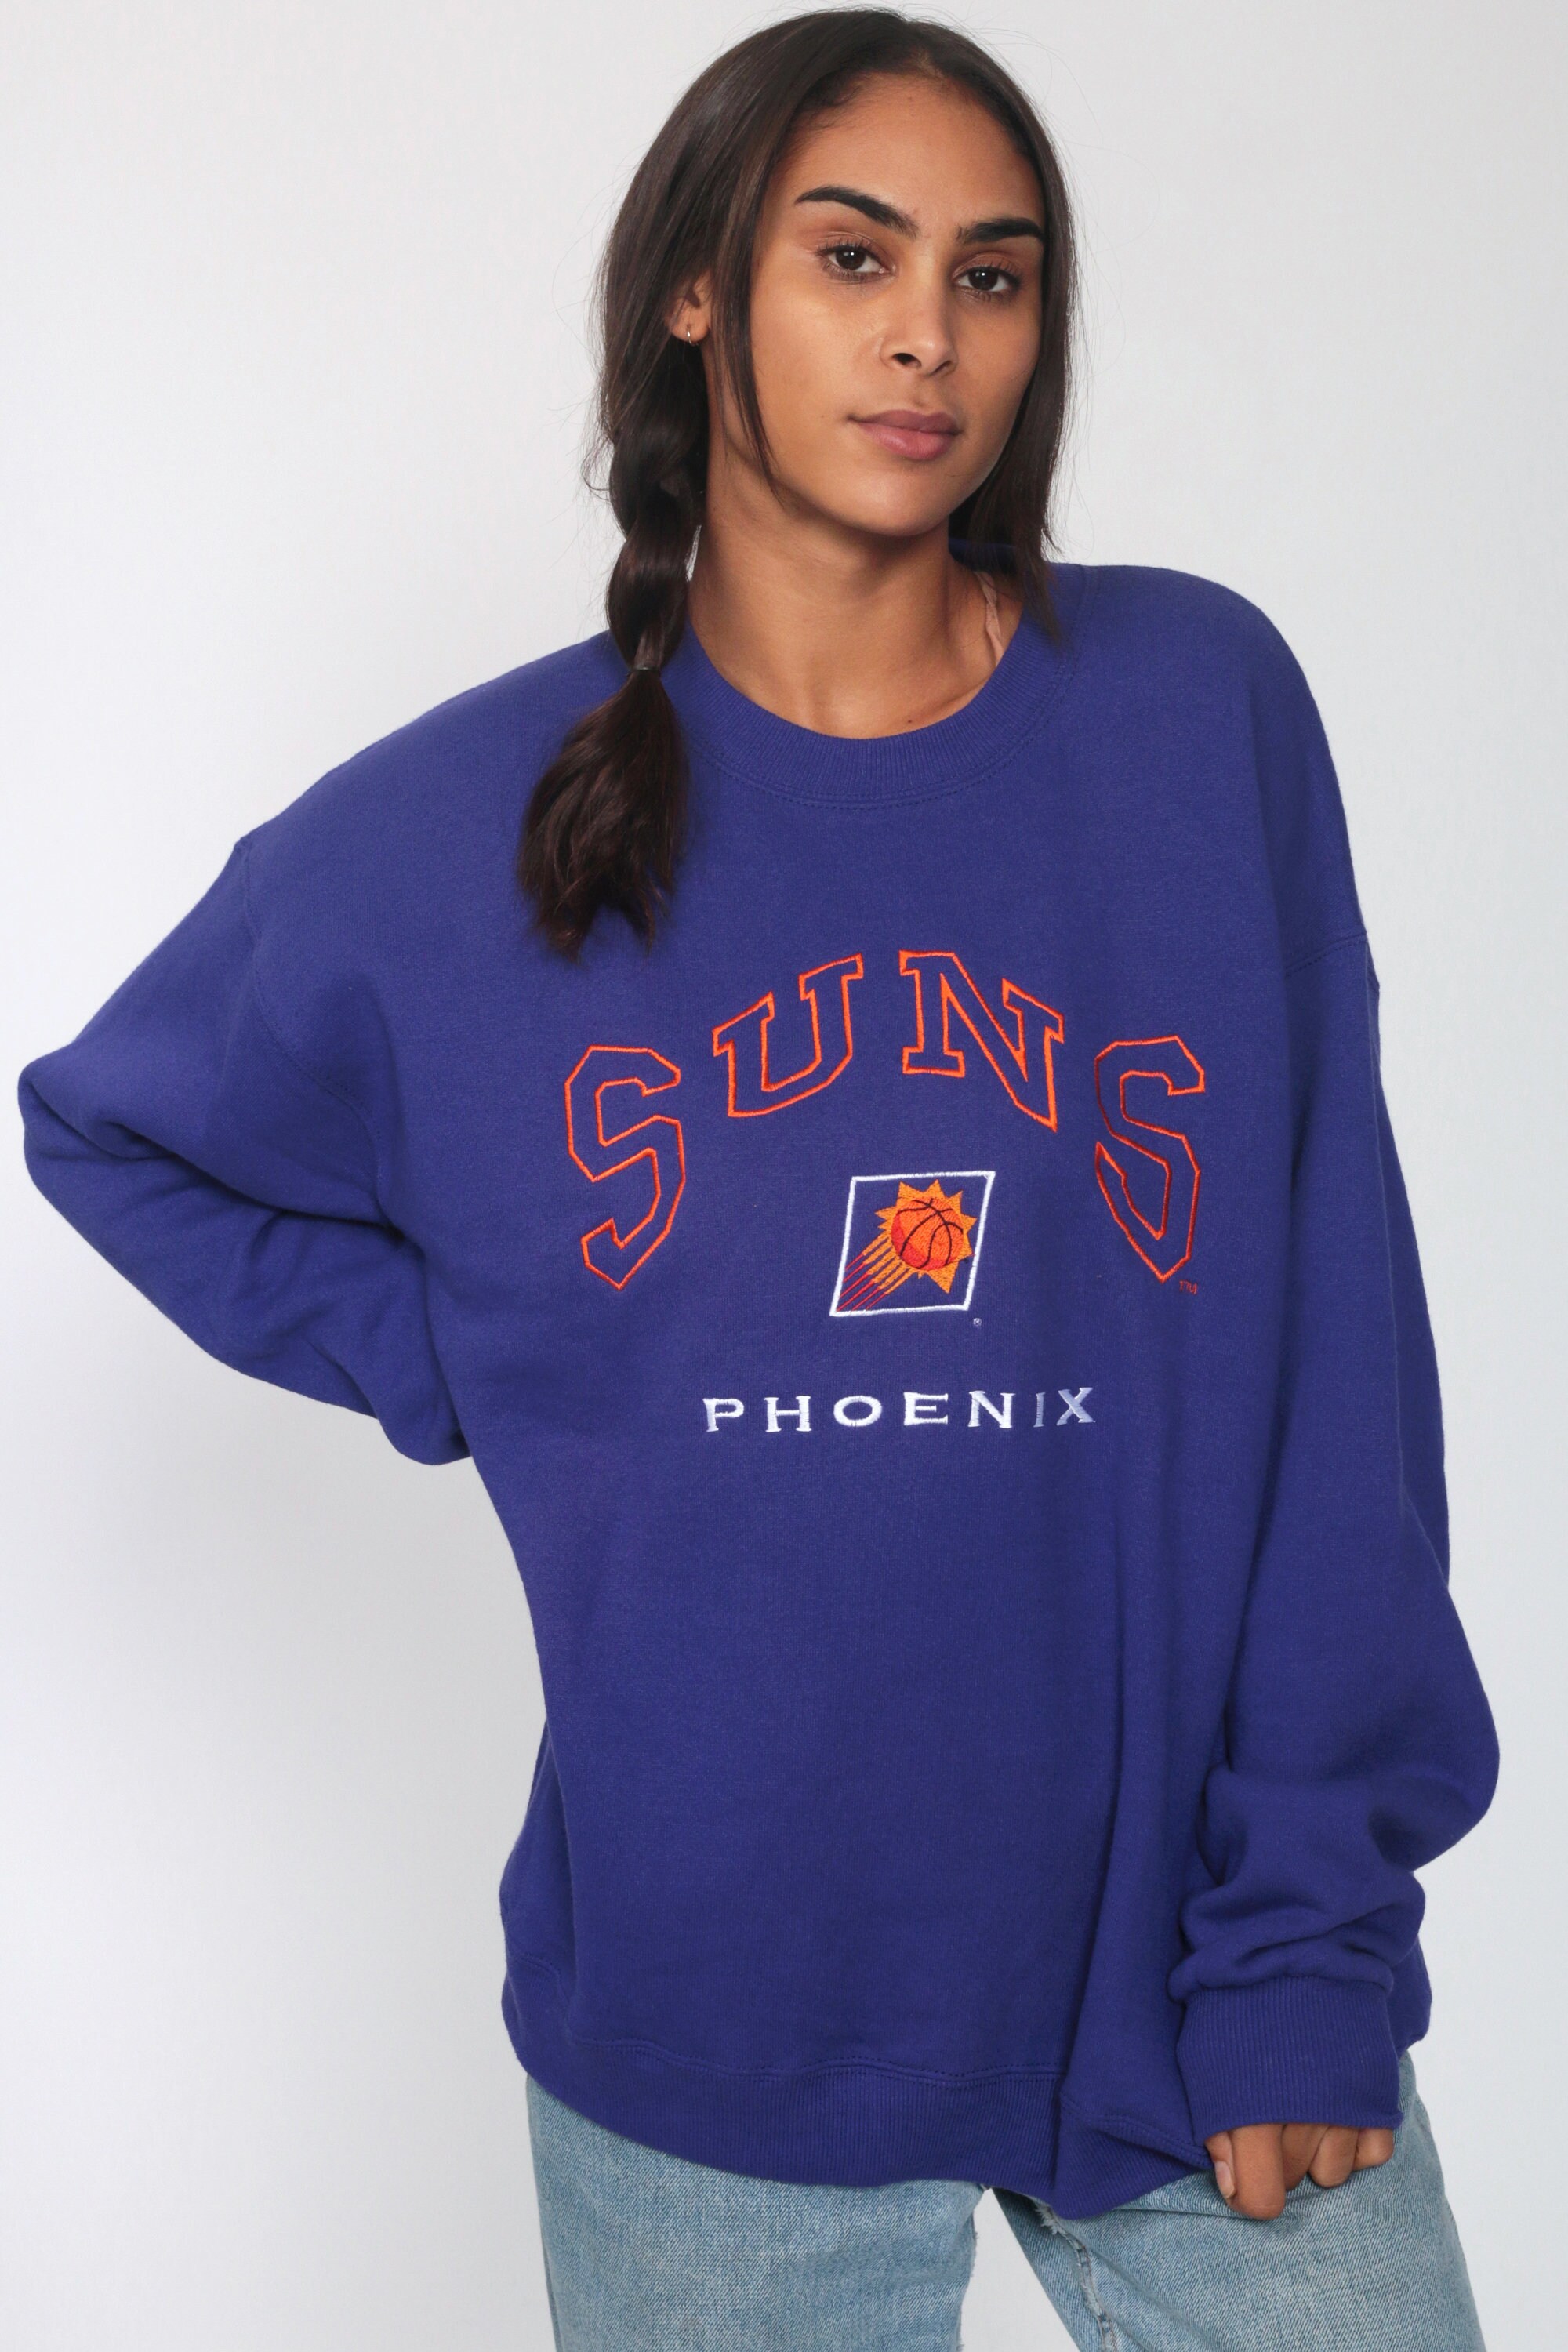 Phoenix Suns Sweatshirt 90s Basketball Shirt NBA Sweatshirt Graphic ...